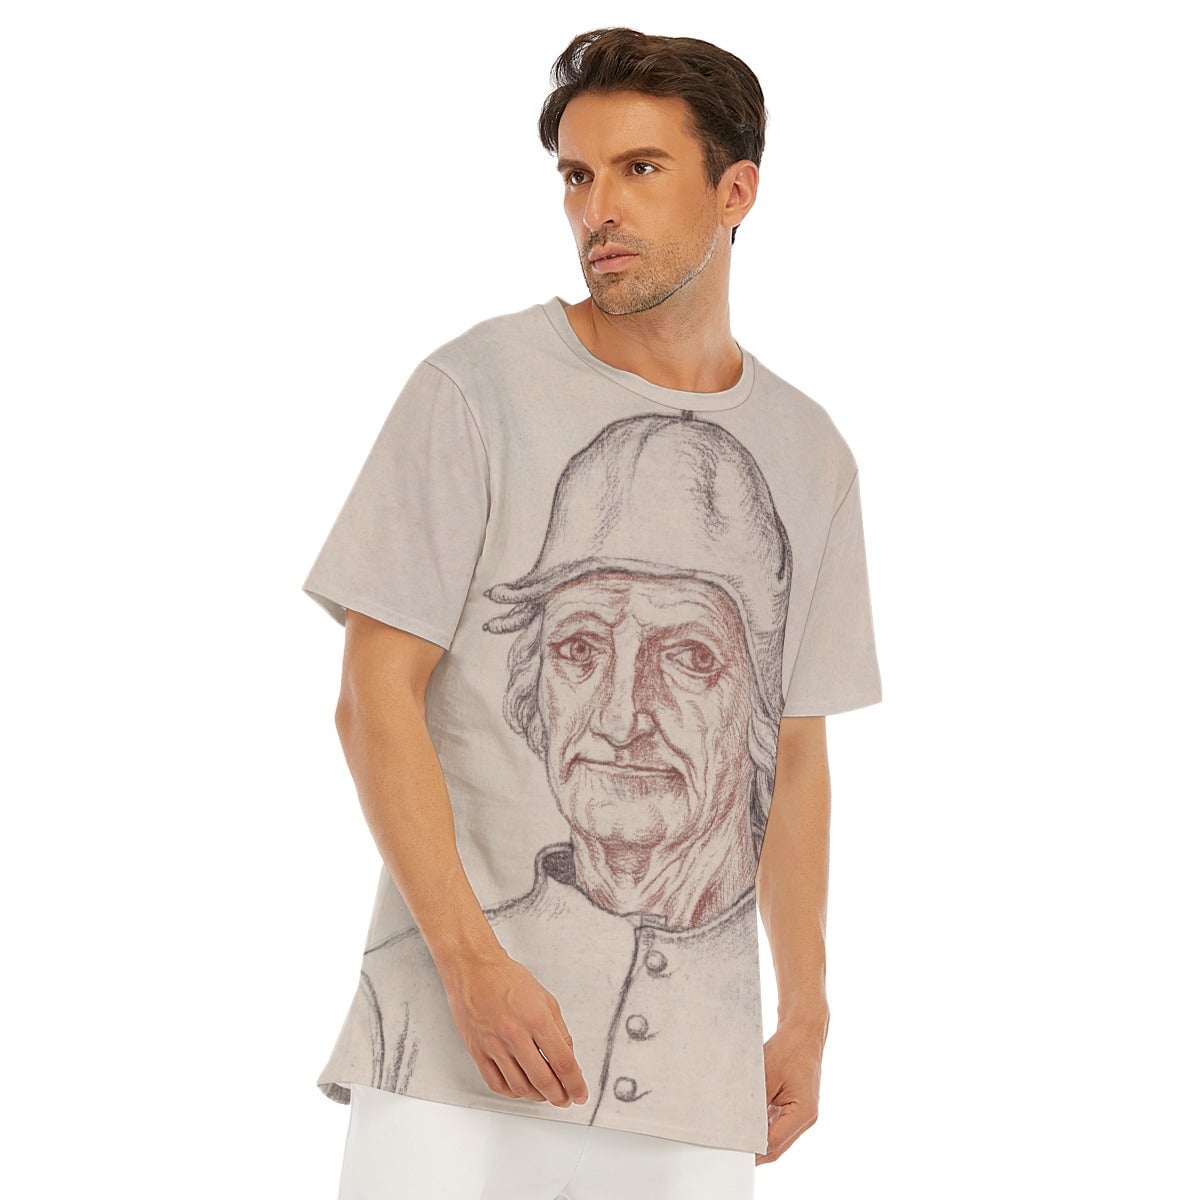 Hieronymus Bosch Portrait Drawing T-Shirt